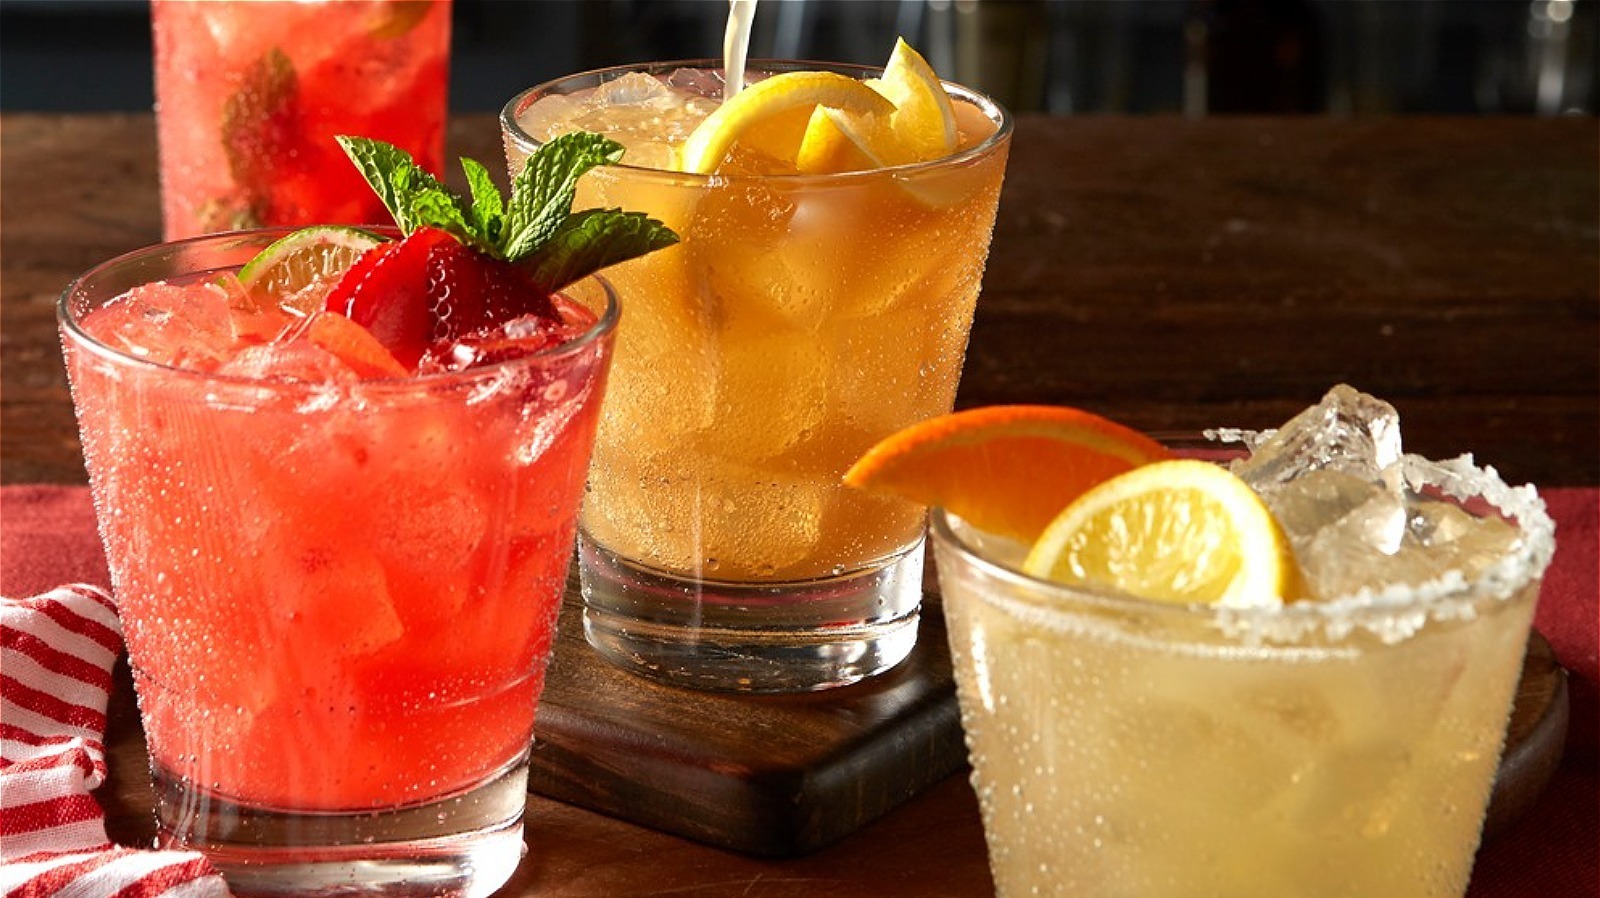 TGI Fridays' New Happy Hour Menu Means AllDay Drink Deals